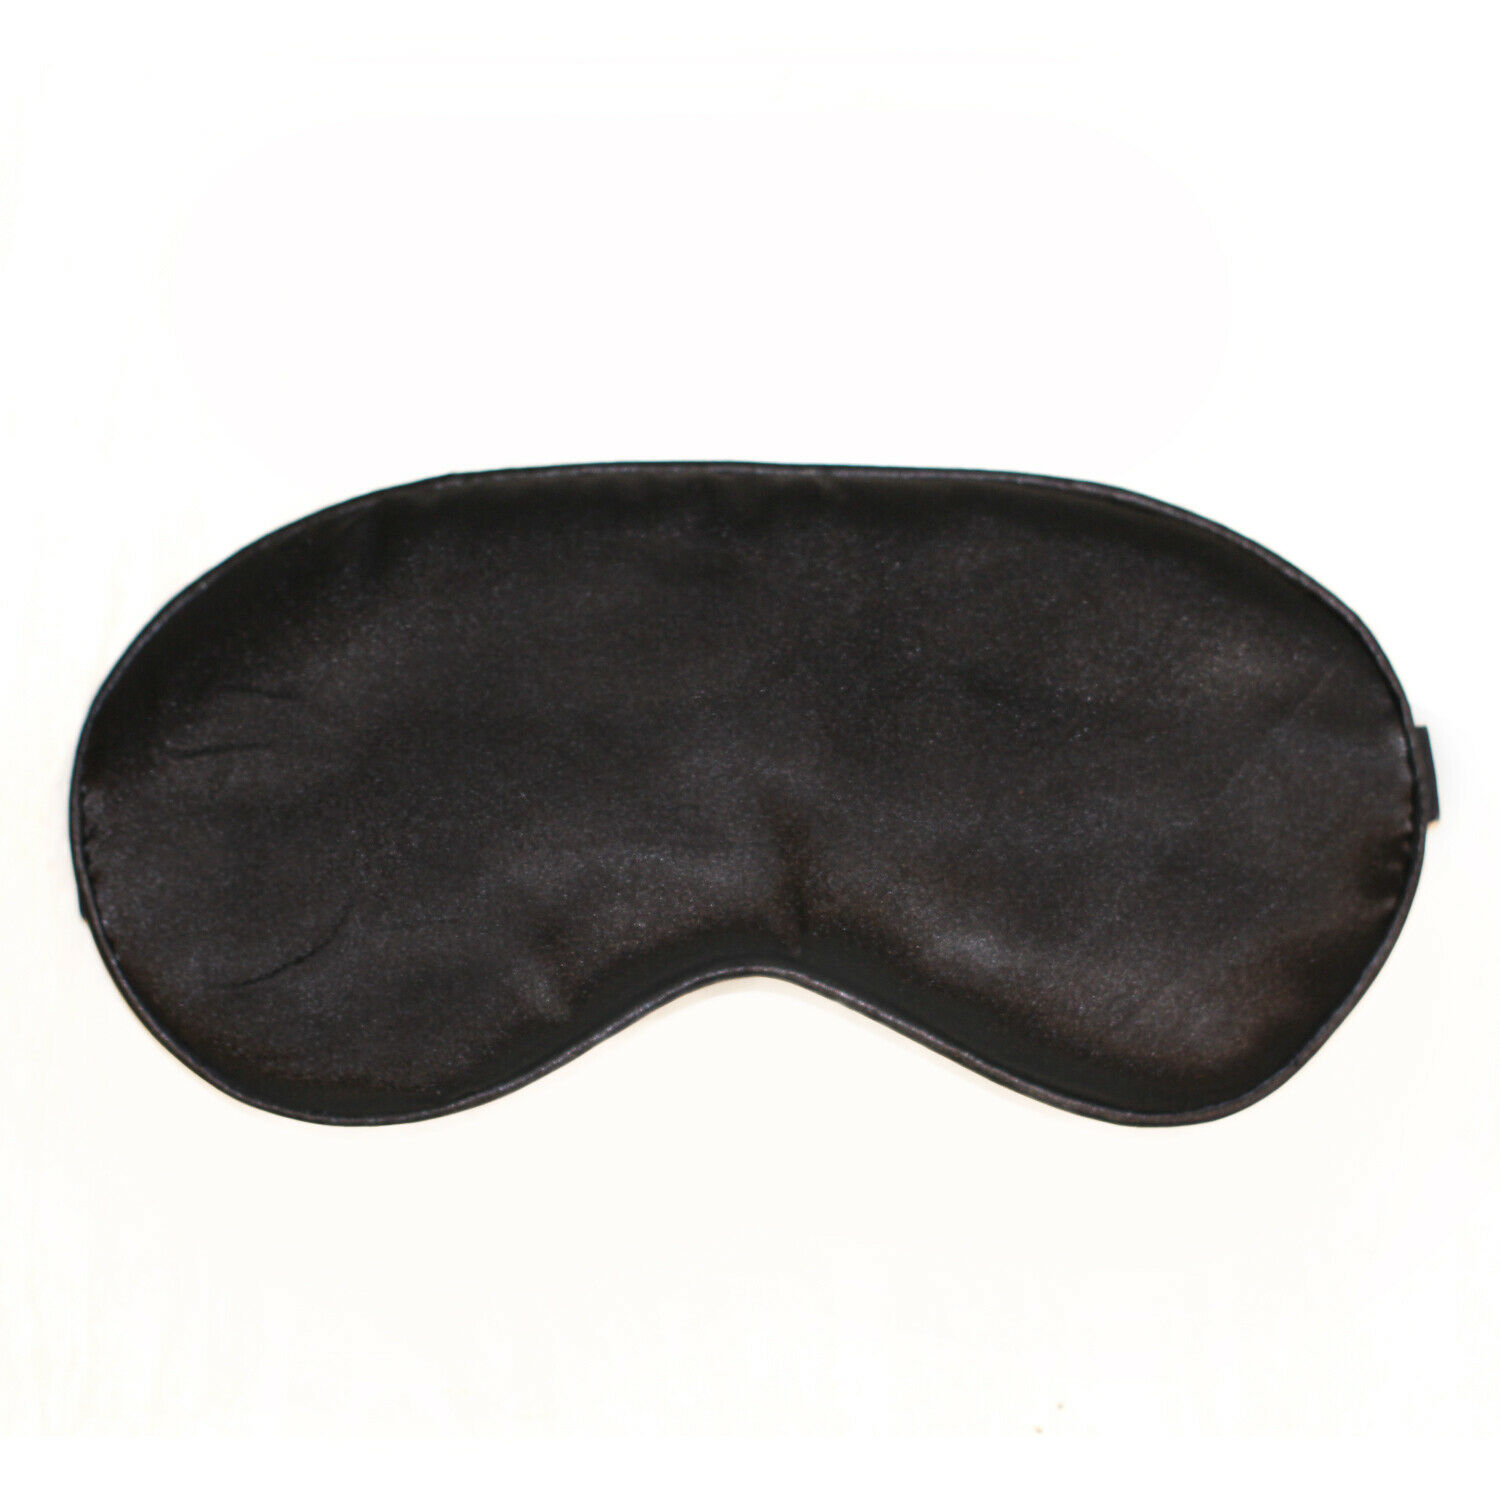 100% Pure Silk Sleep Mask Adjustable Strap Black Blindfold Comfortable Cover